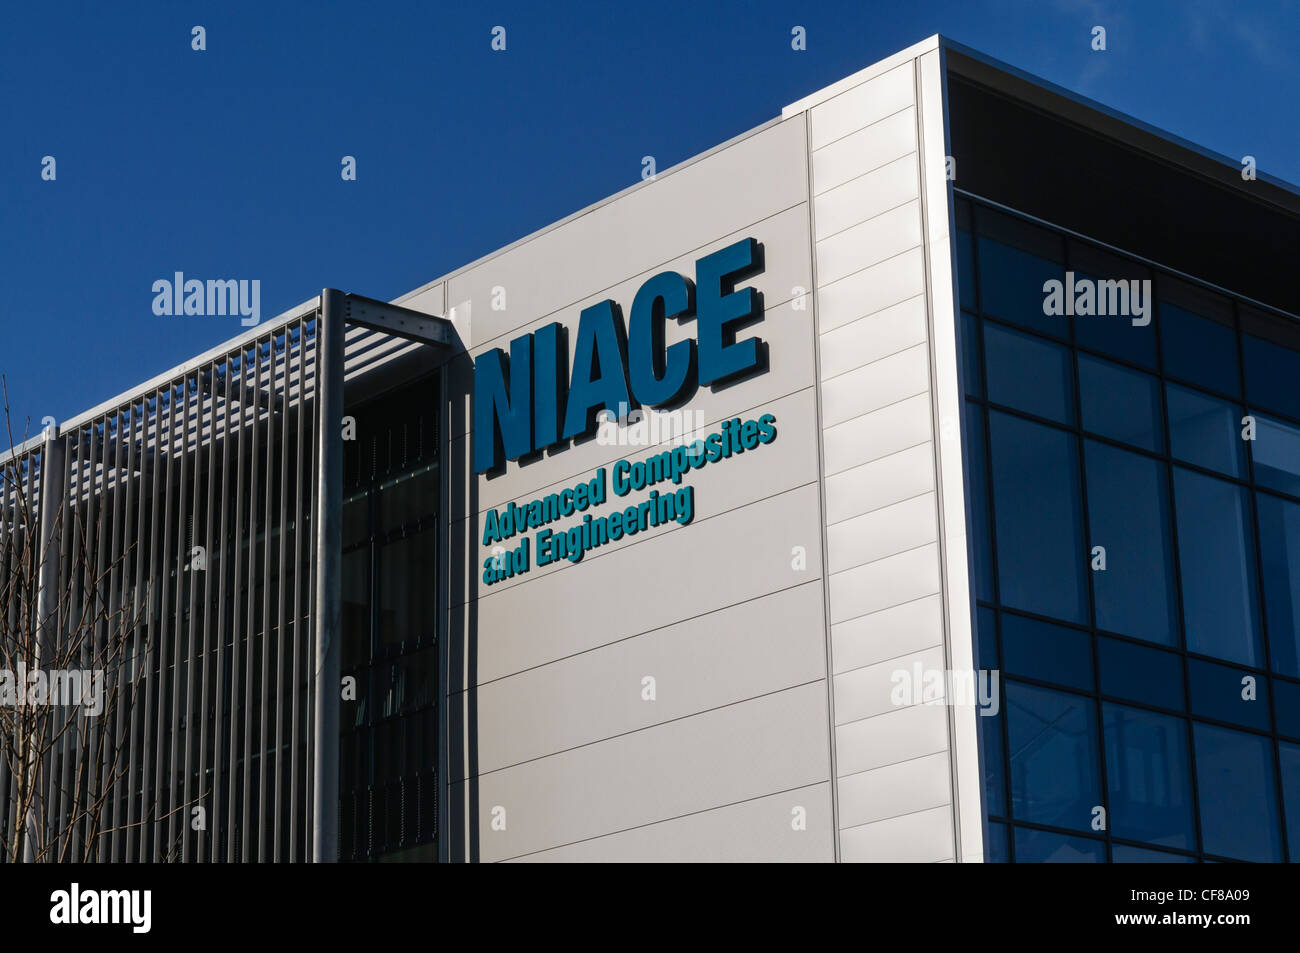 Nordirland Adfvanced Composites und Engineering (NIACE) Gebäude Stockfoto